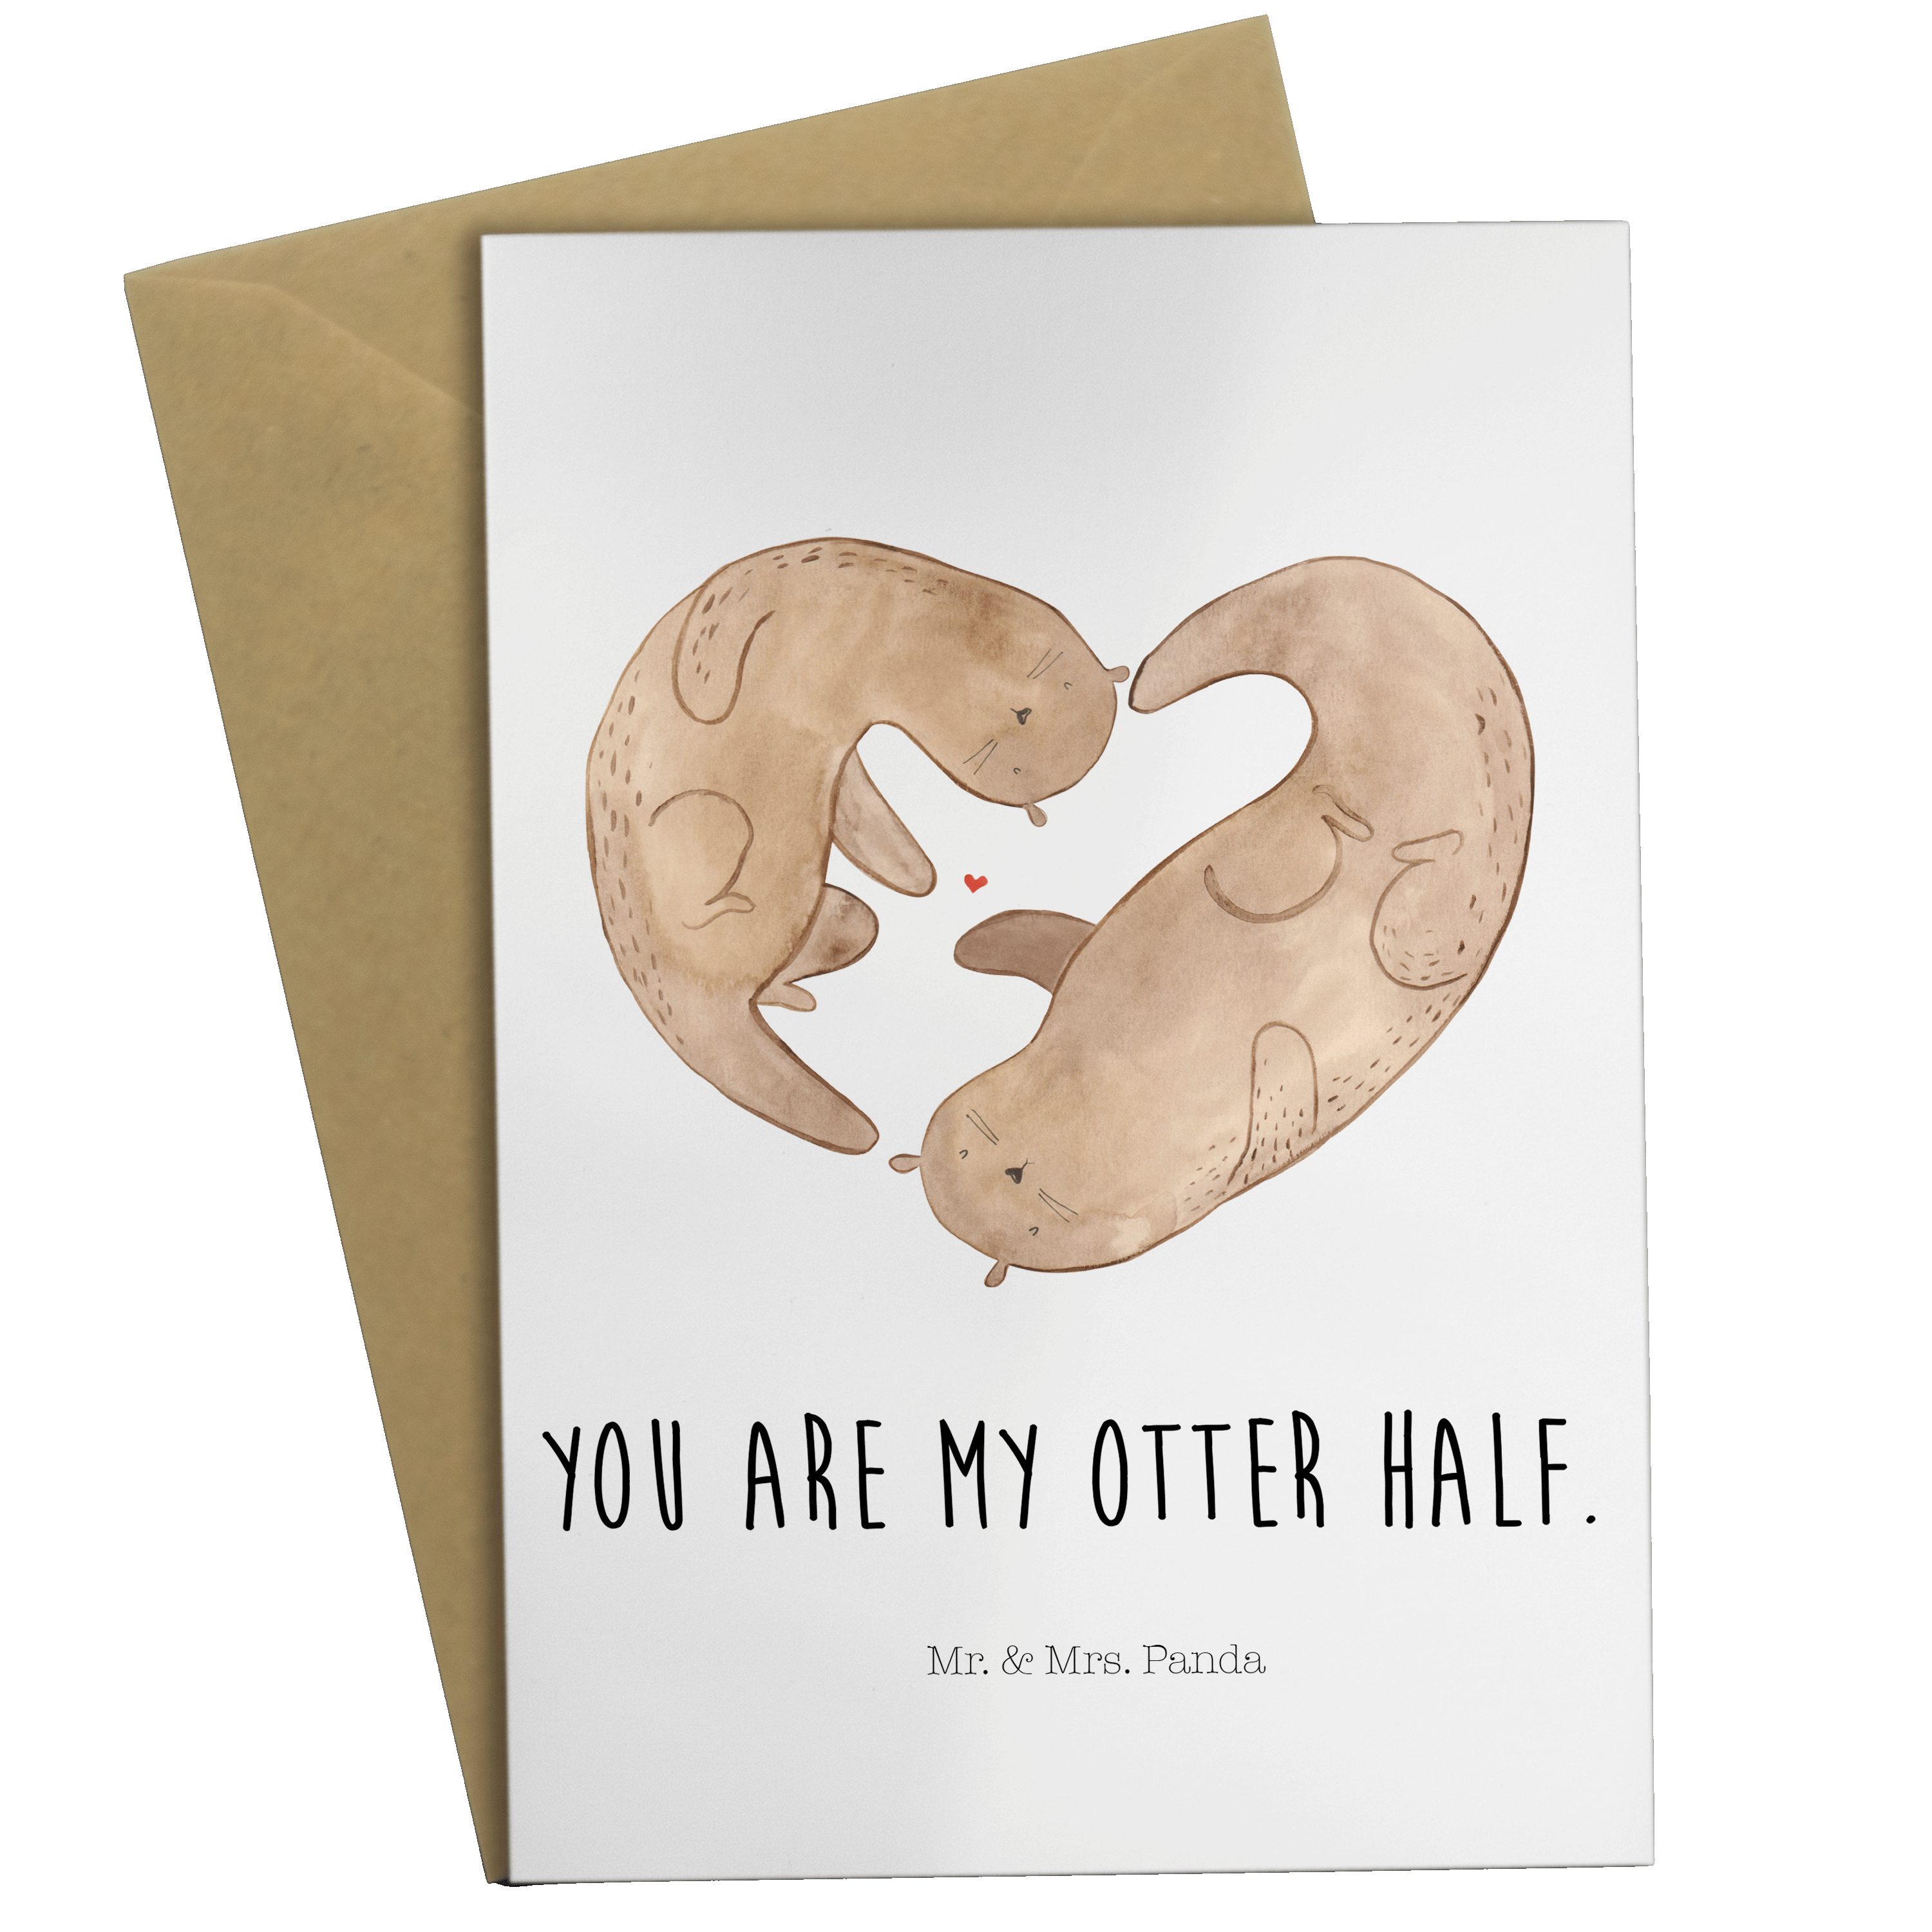 Mr. & Mrs. Panda Grußkarte Otter Herz - Weiß - Geschenk, große Liebe, Fischotter, Glückwunschkar